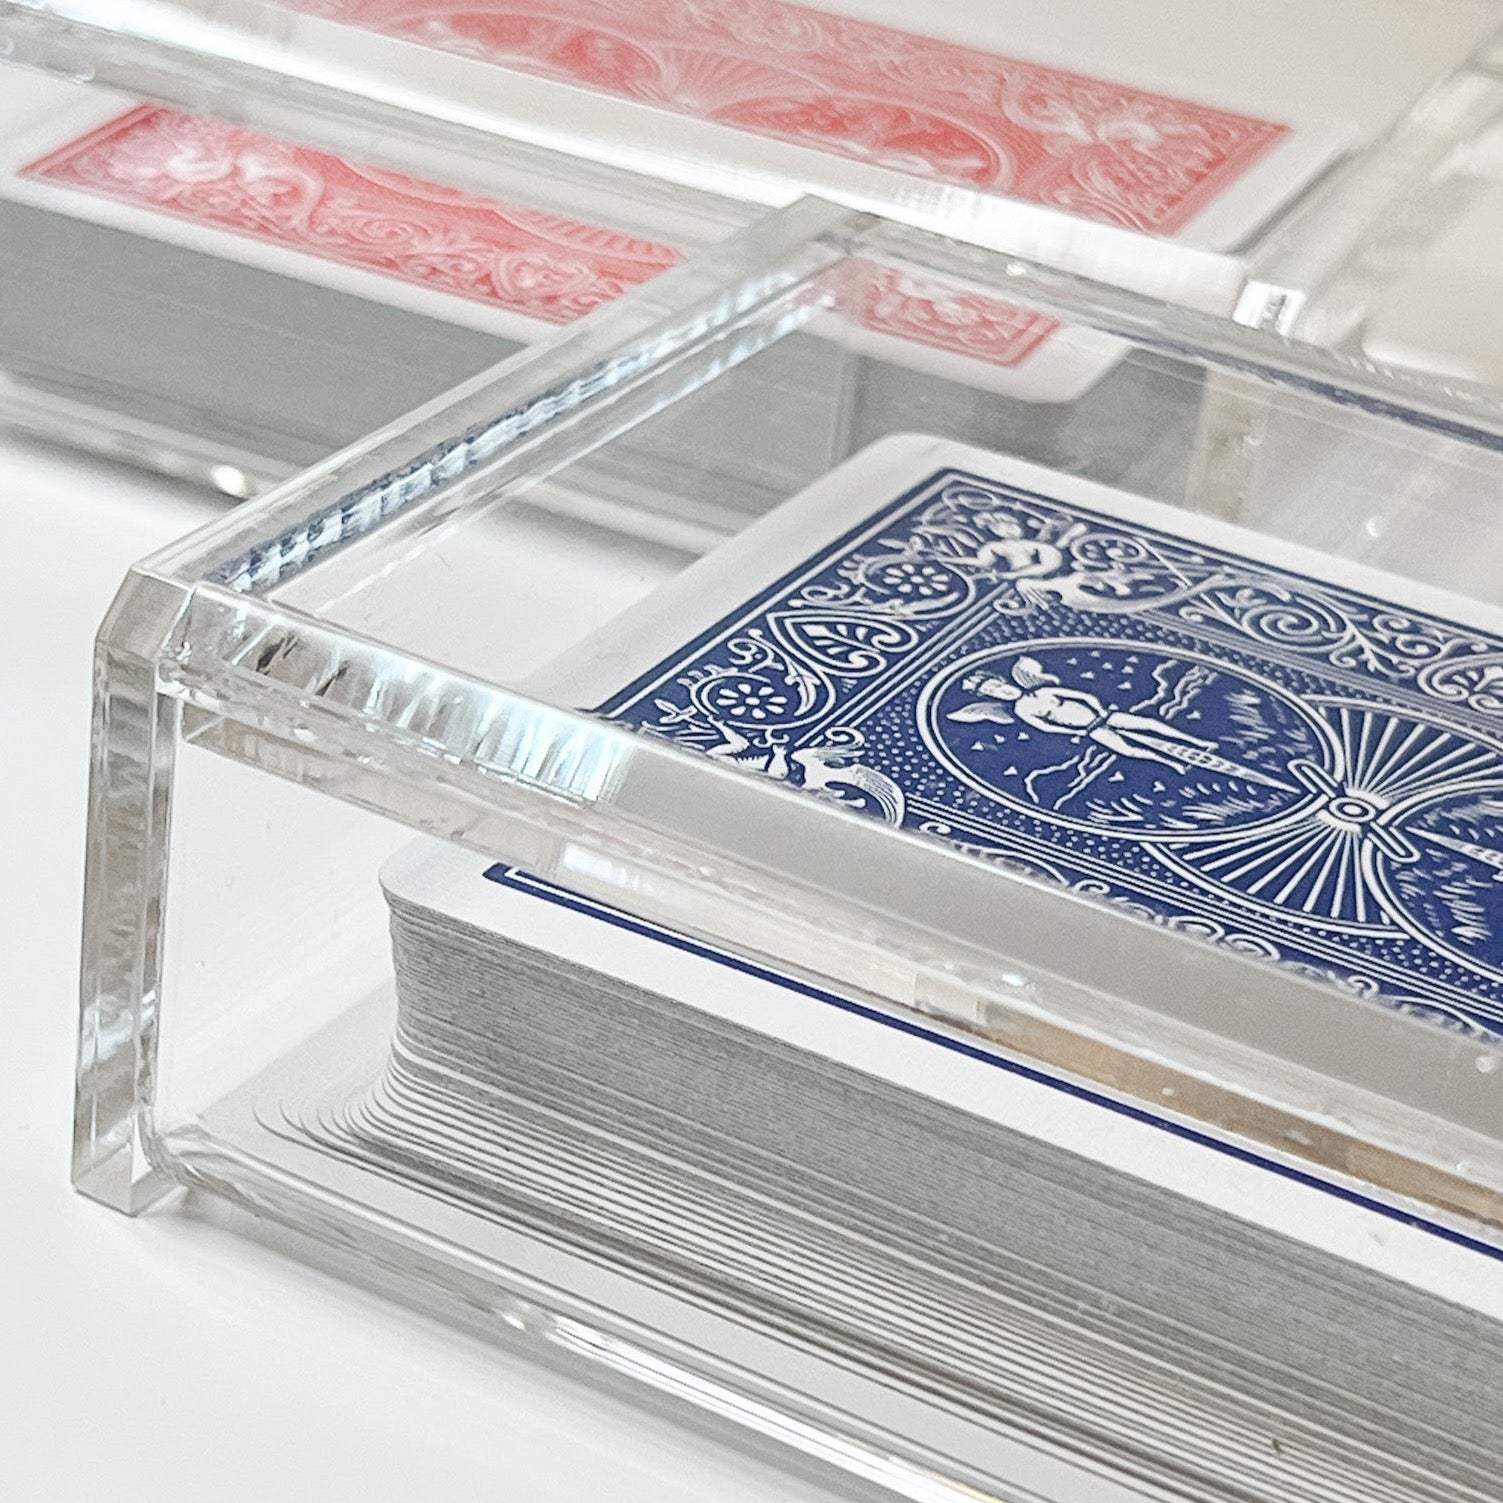 Acrylic Card Box - Danshire Market and Design 